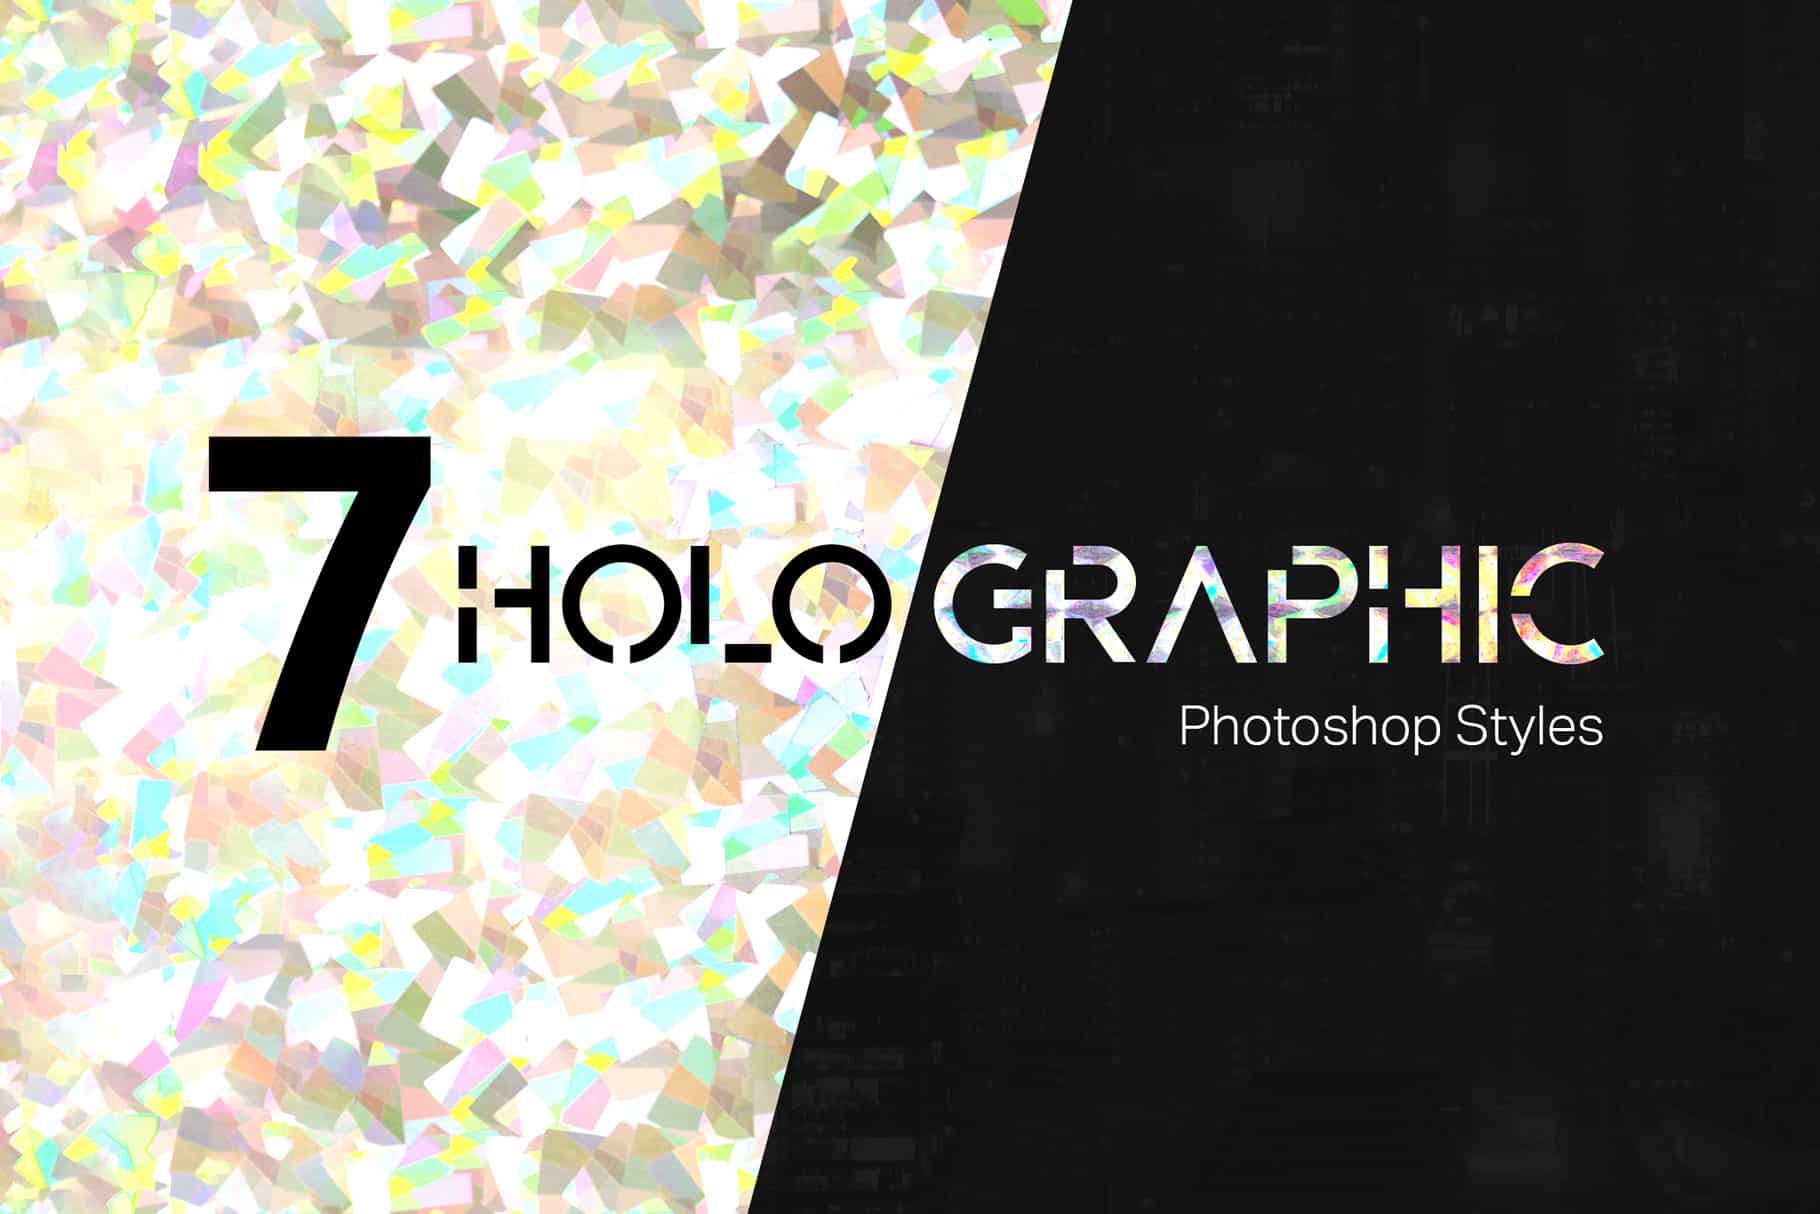 Holographic Photoshop Styles